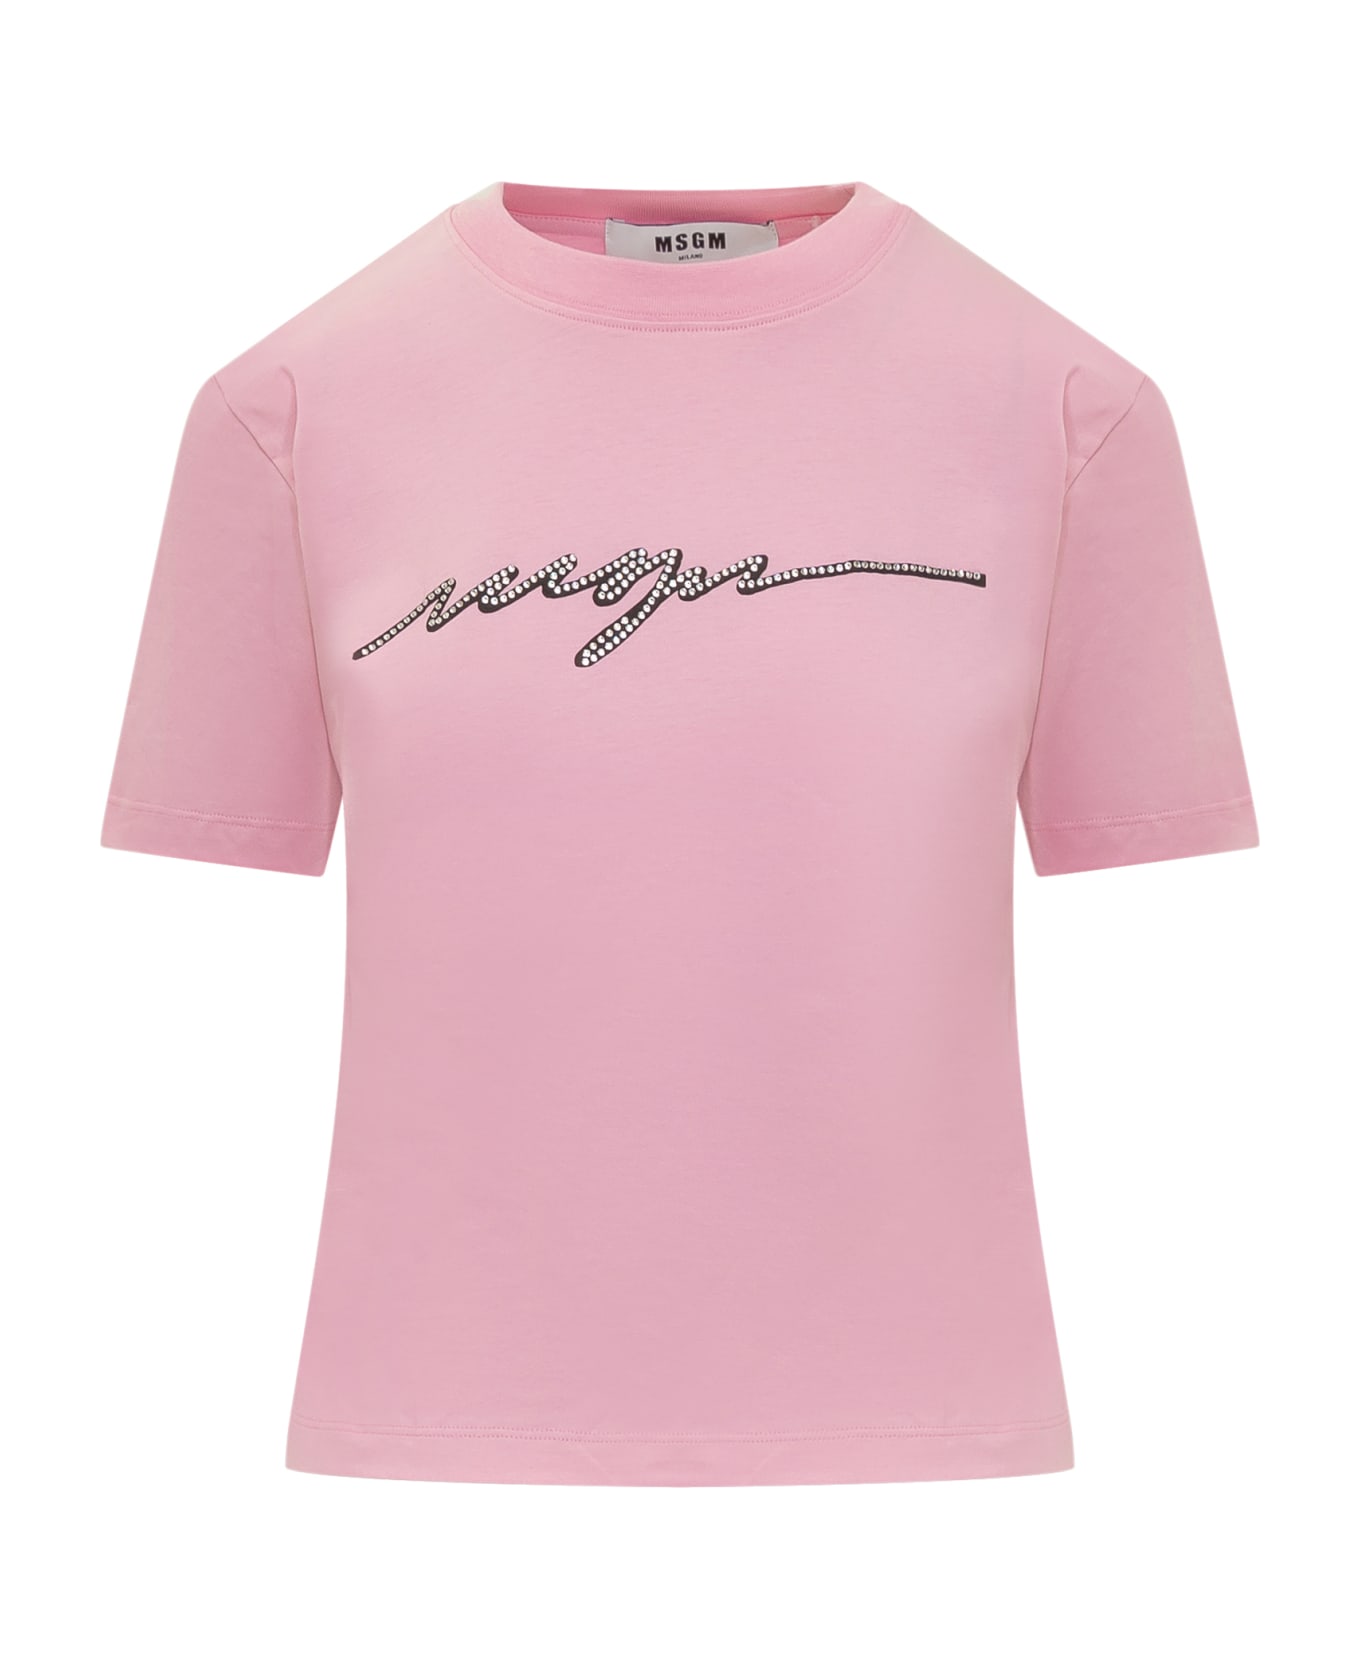 MSGM Massimo Giorgetti T-shirt - PINK